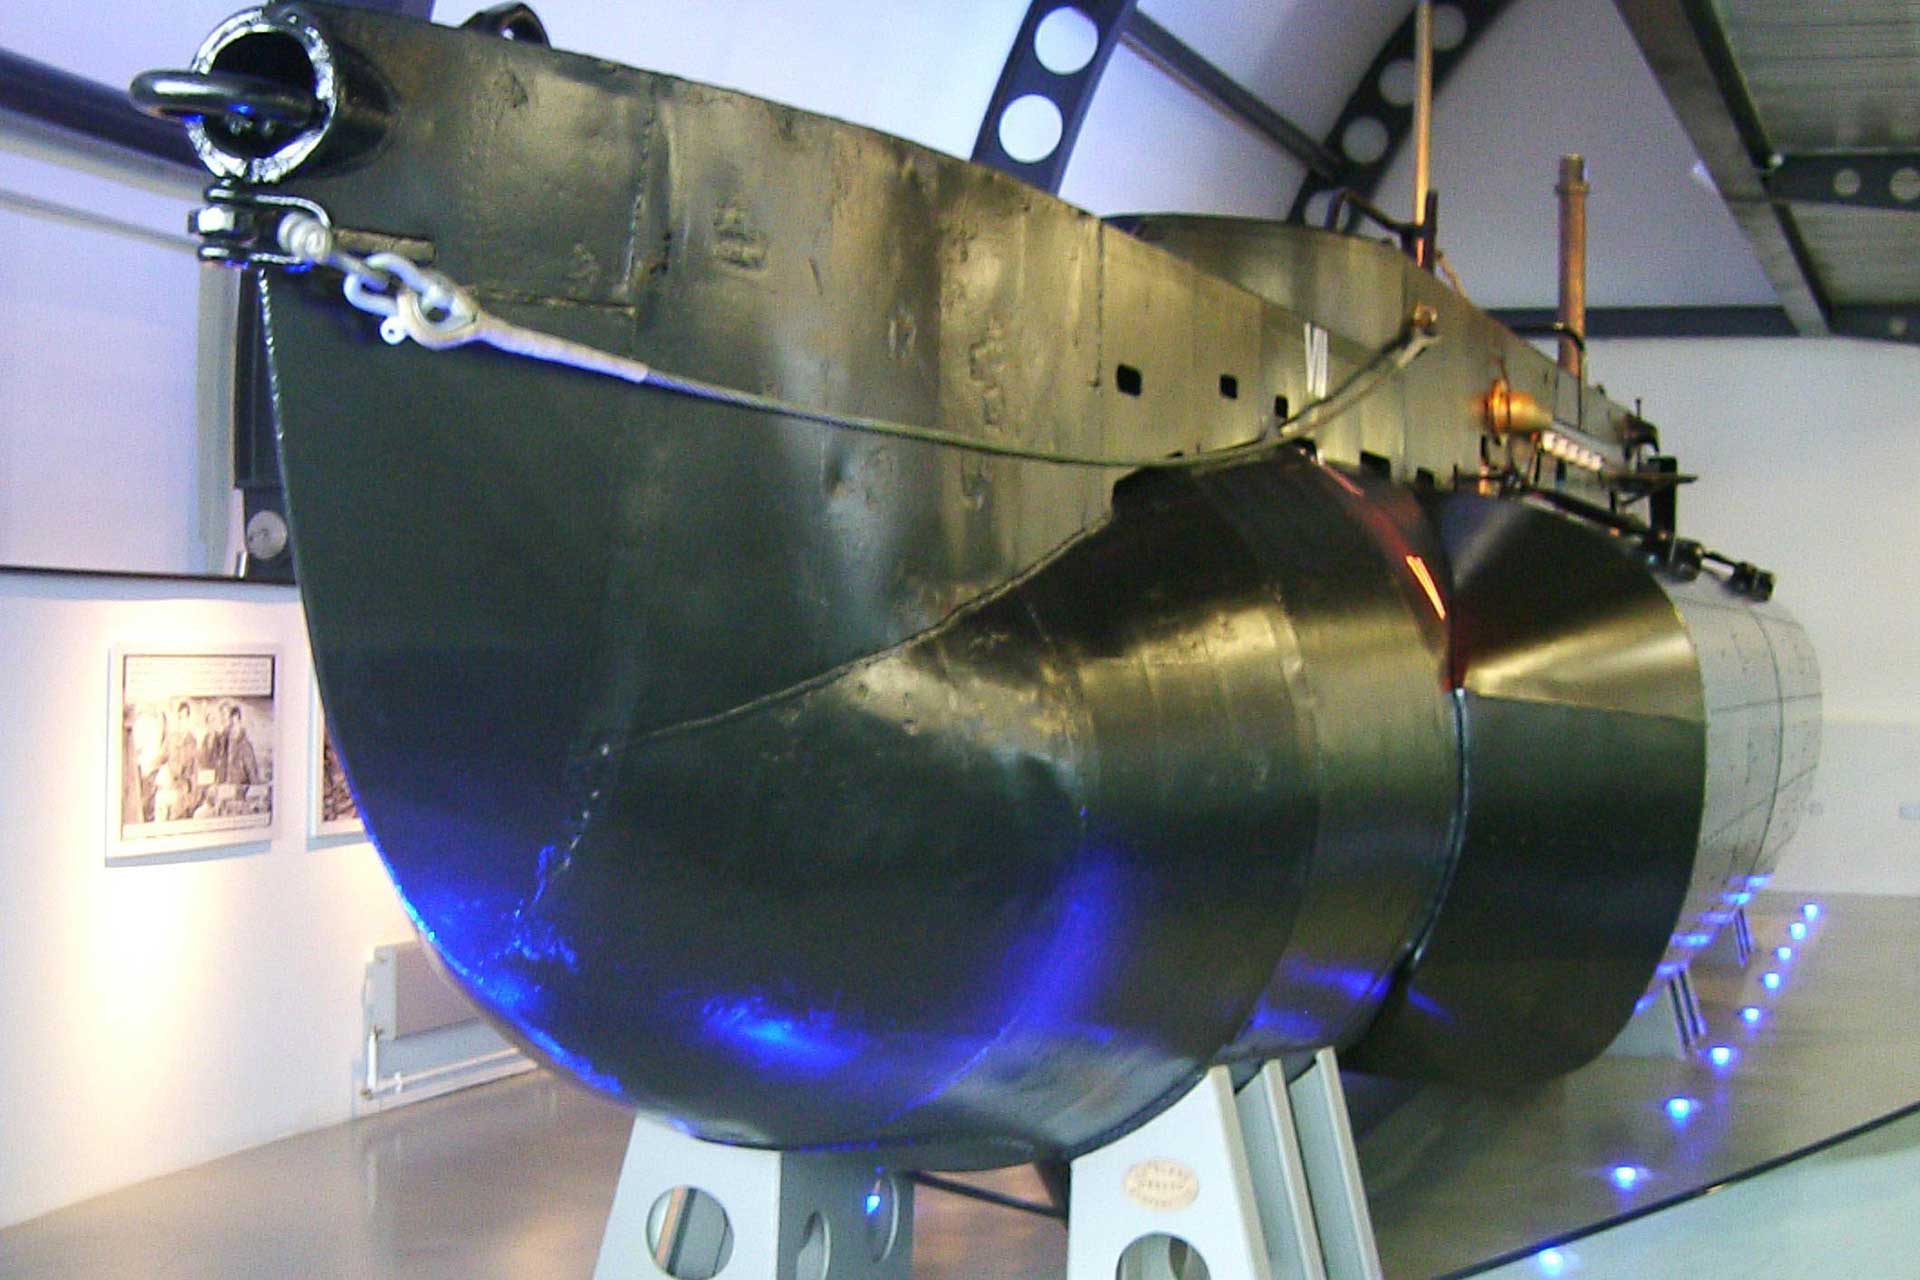 x24 submarine at the Royal Navy Submarine Museum in Gosport